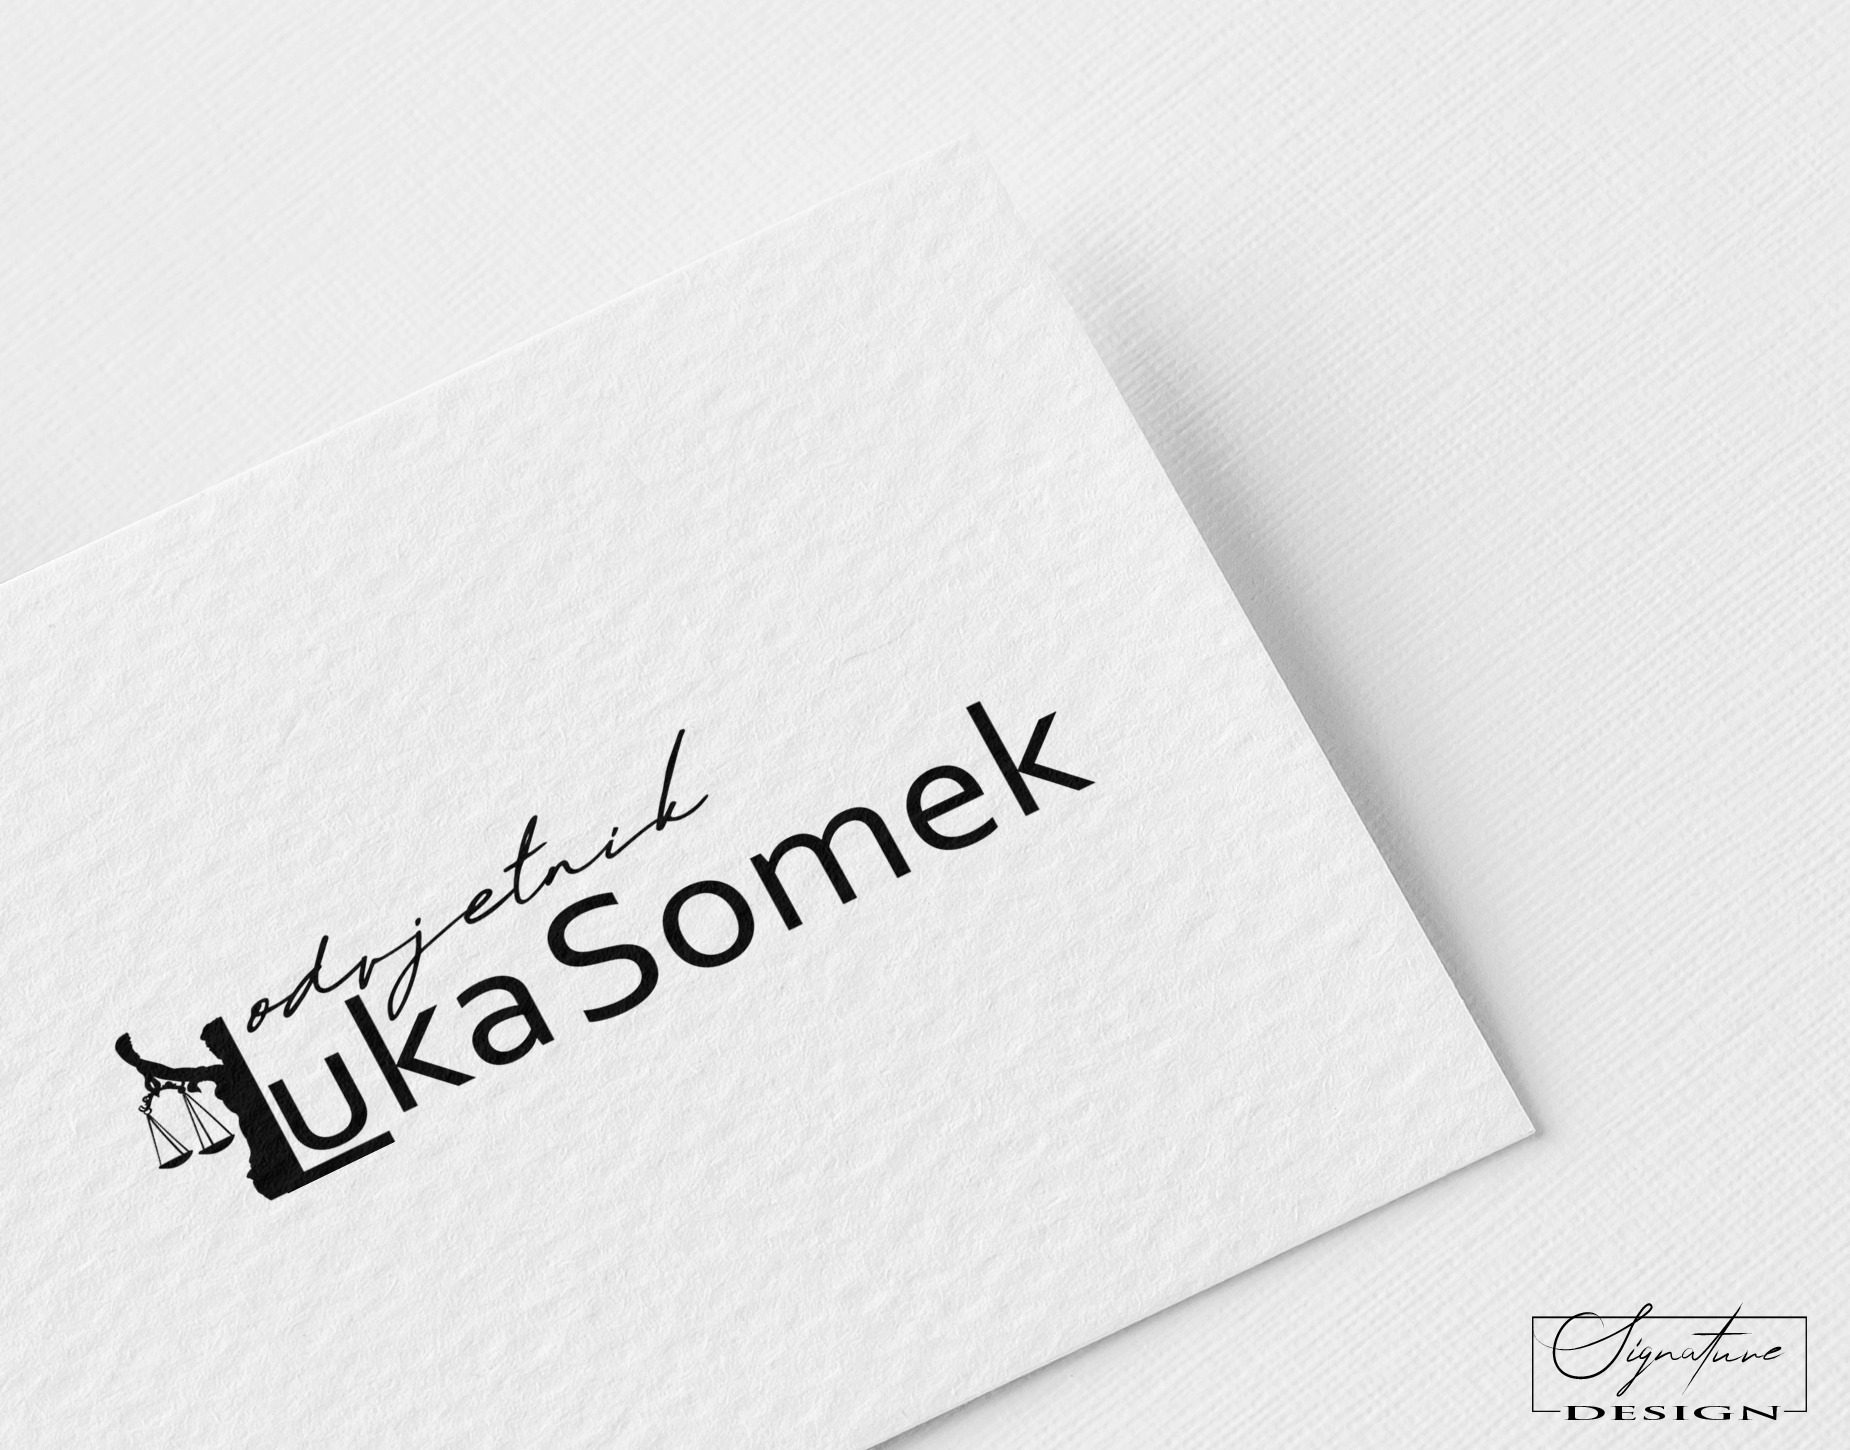 odvjetnik Somek logotip Signature Solutions Design